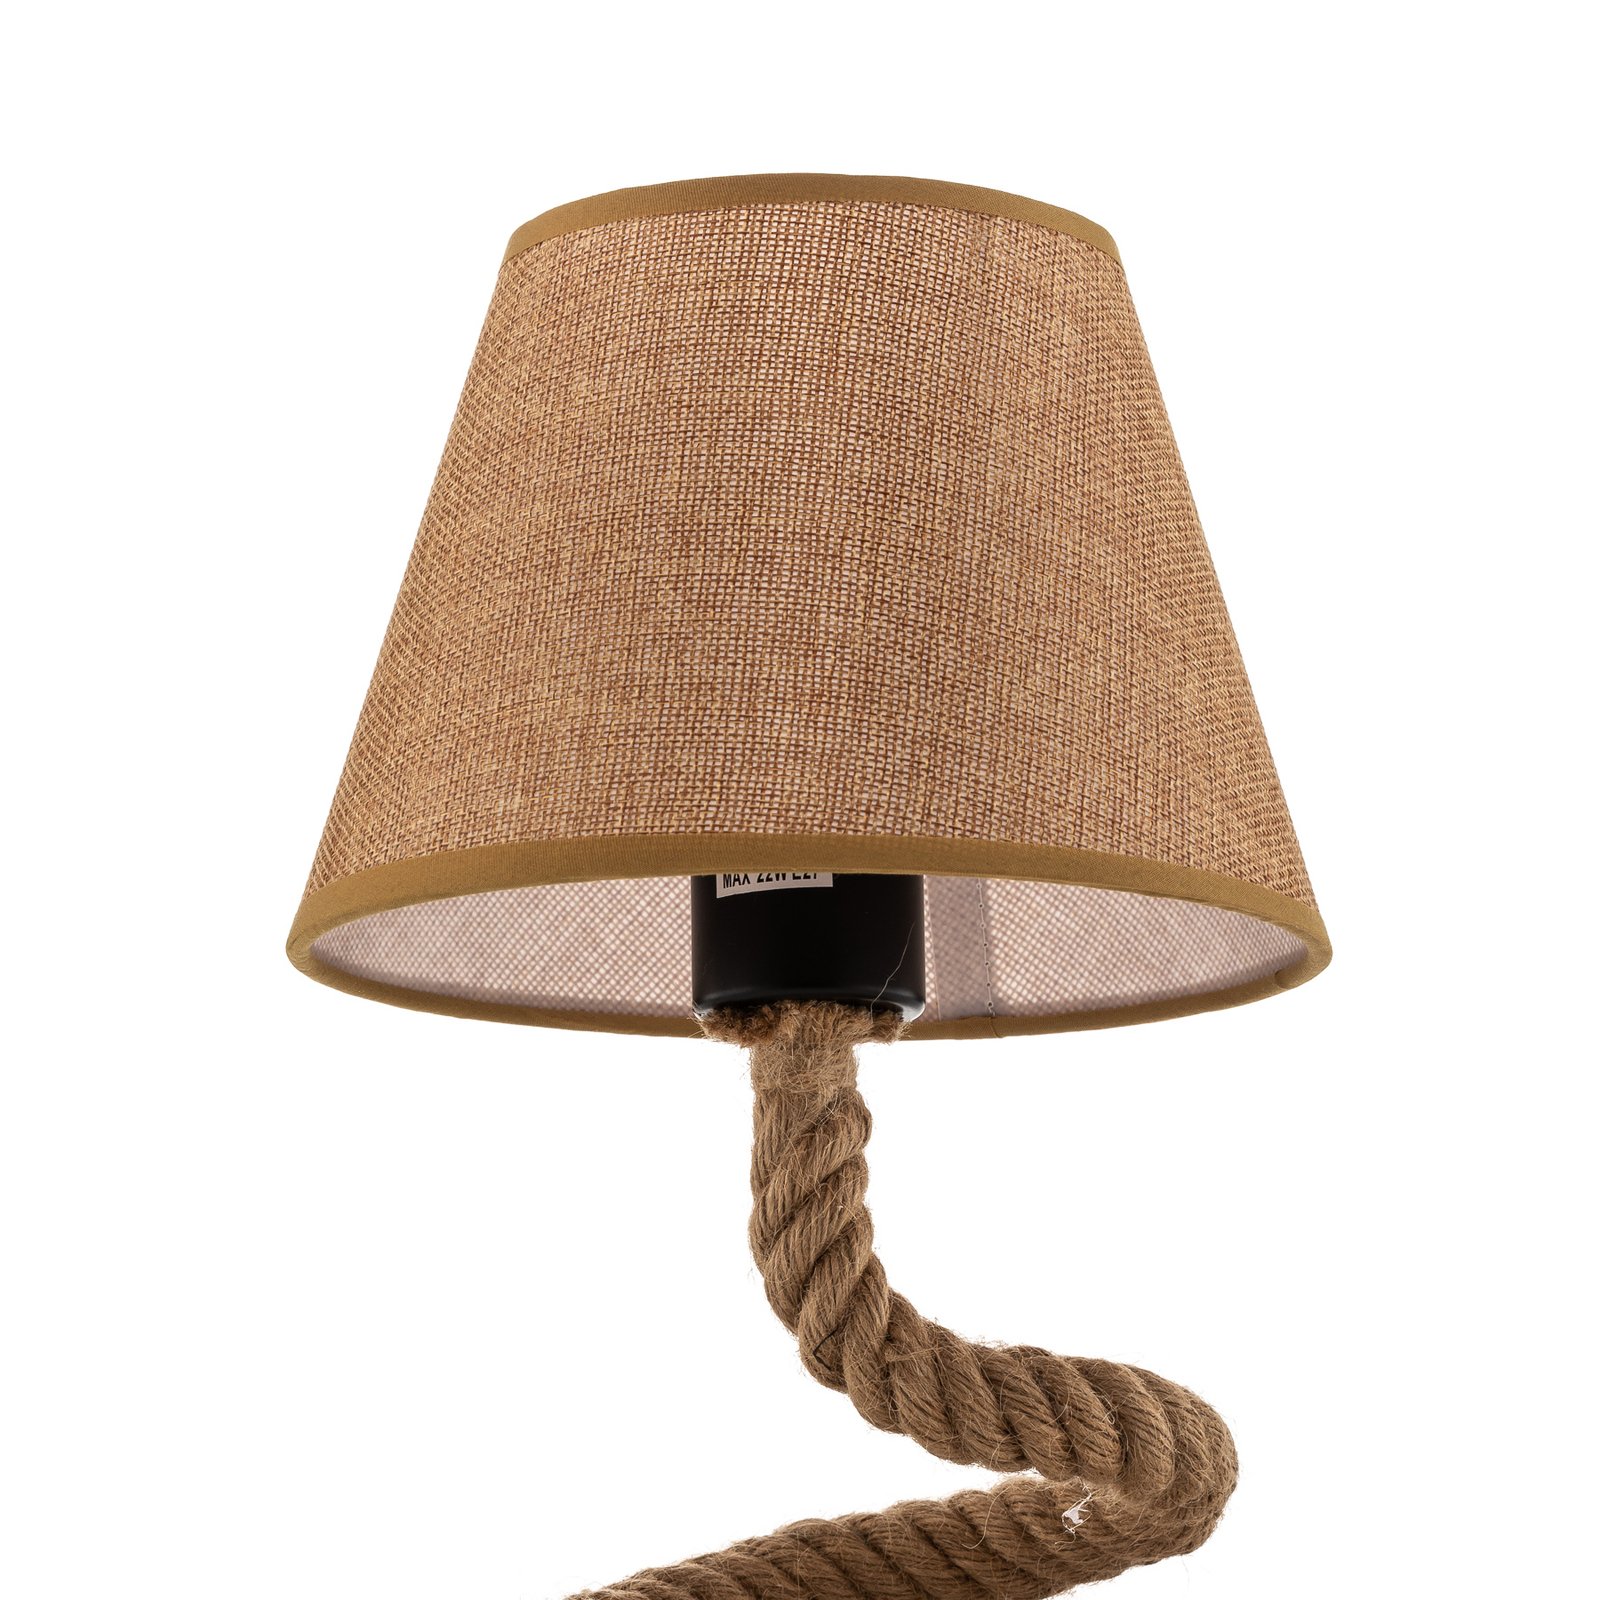 Mauli bordlampe laget av tau og stoff